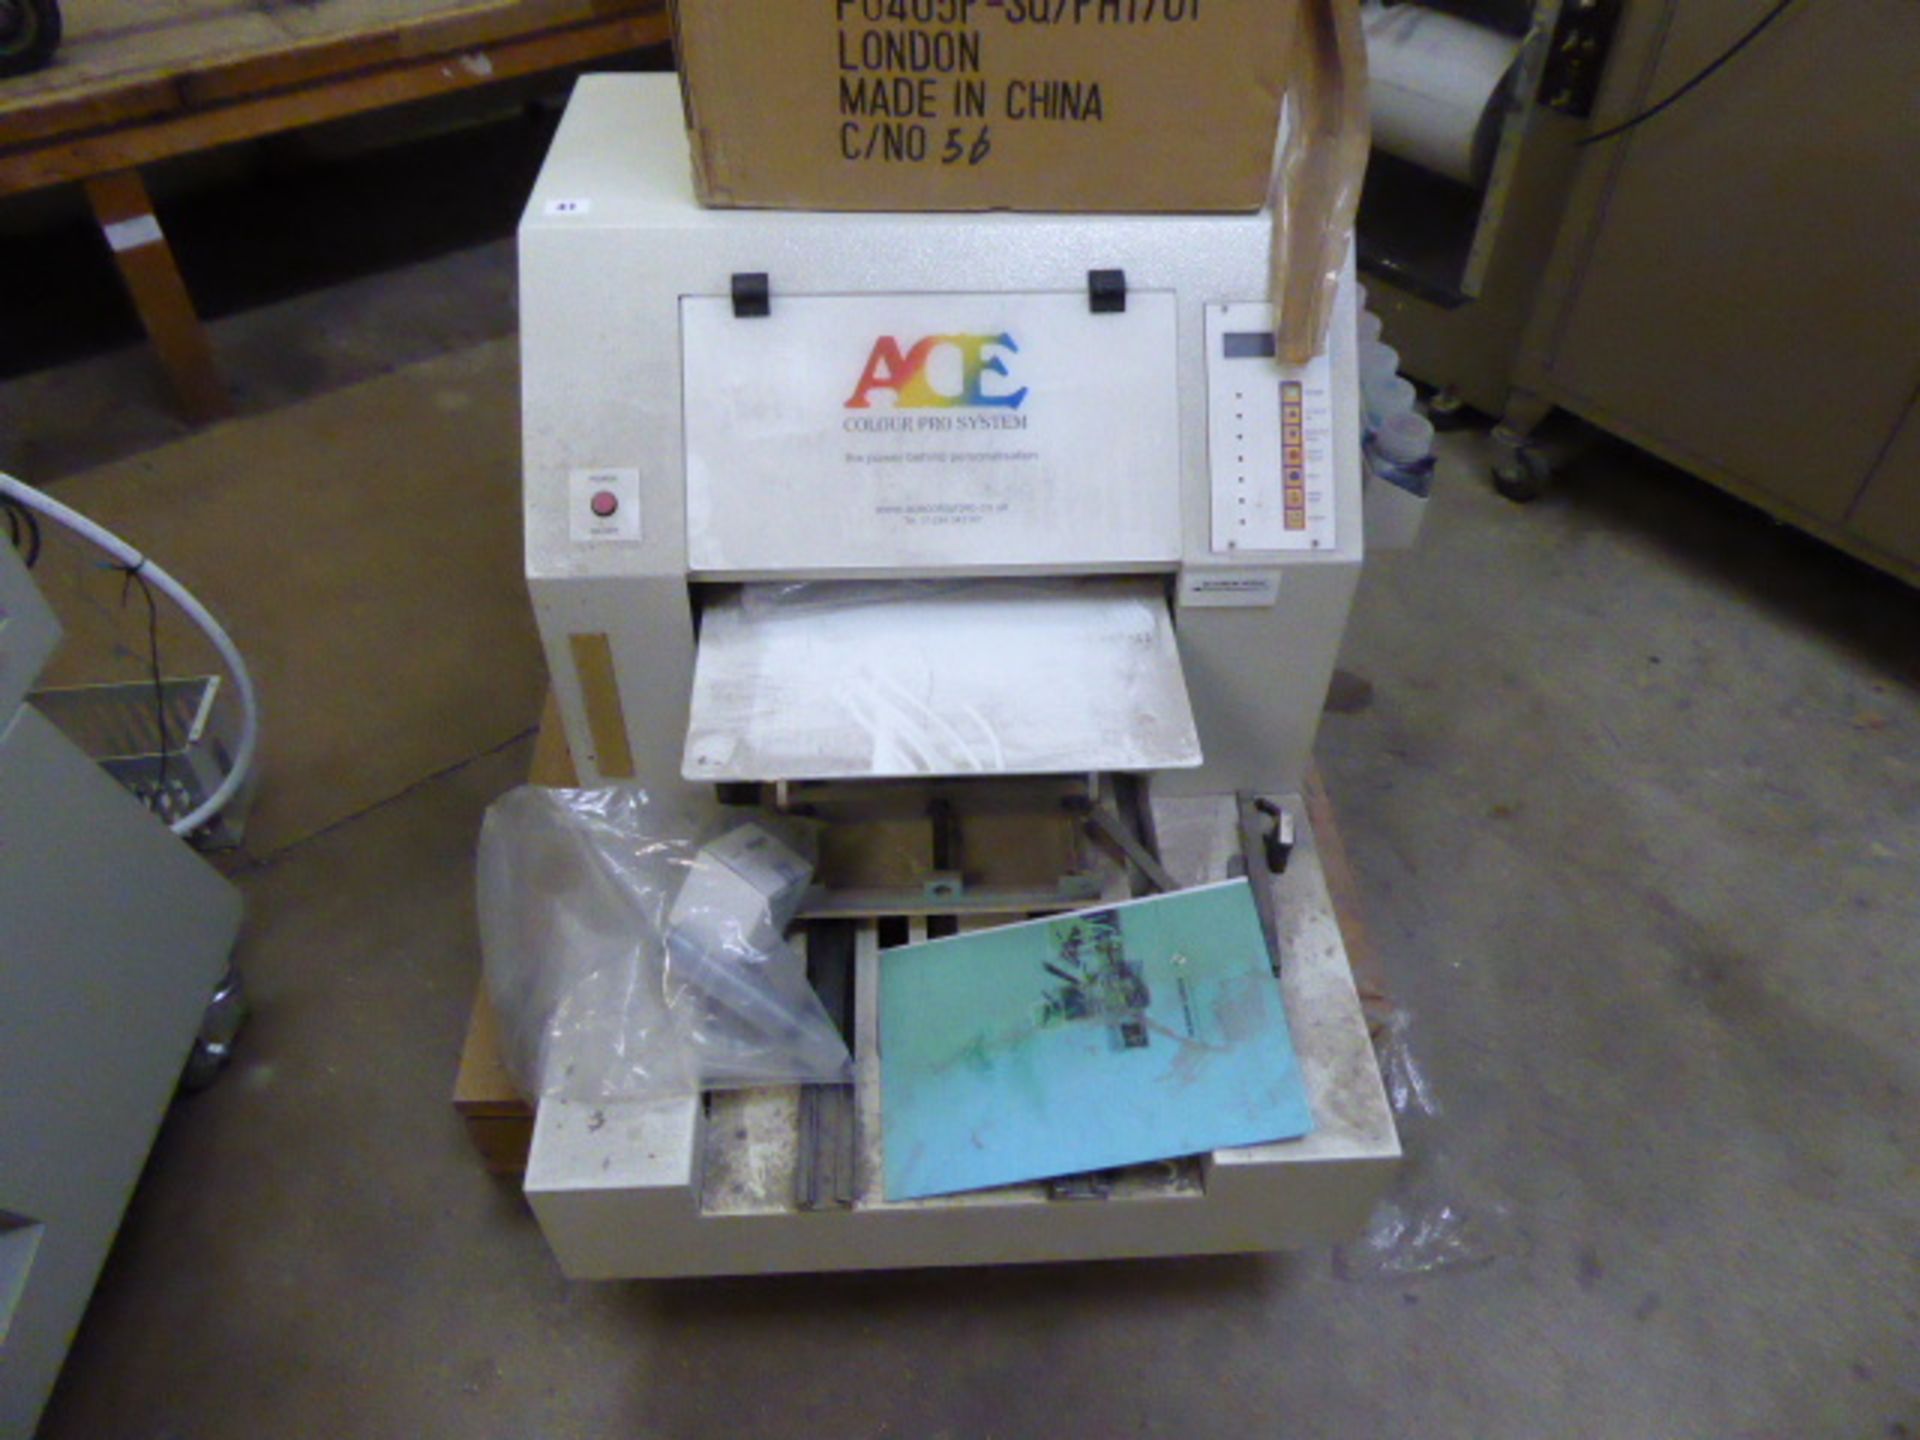 Ace colour pro system specialist printer